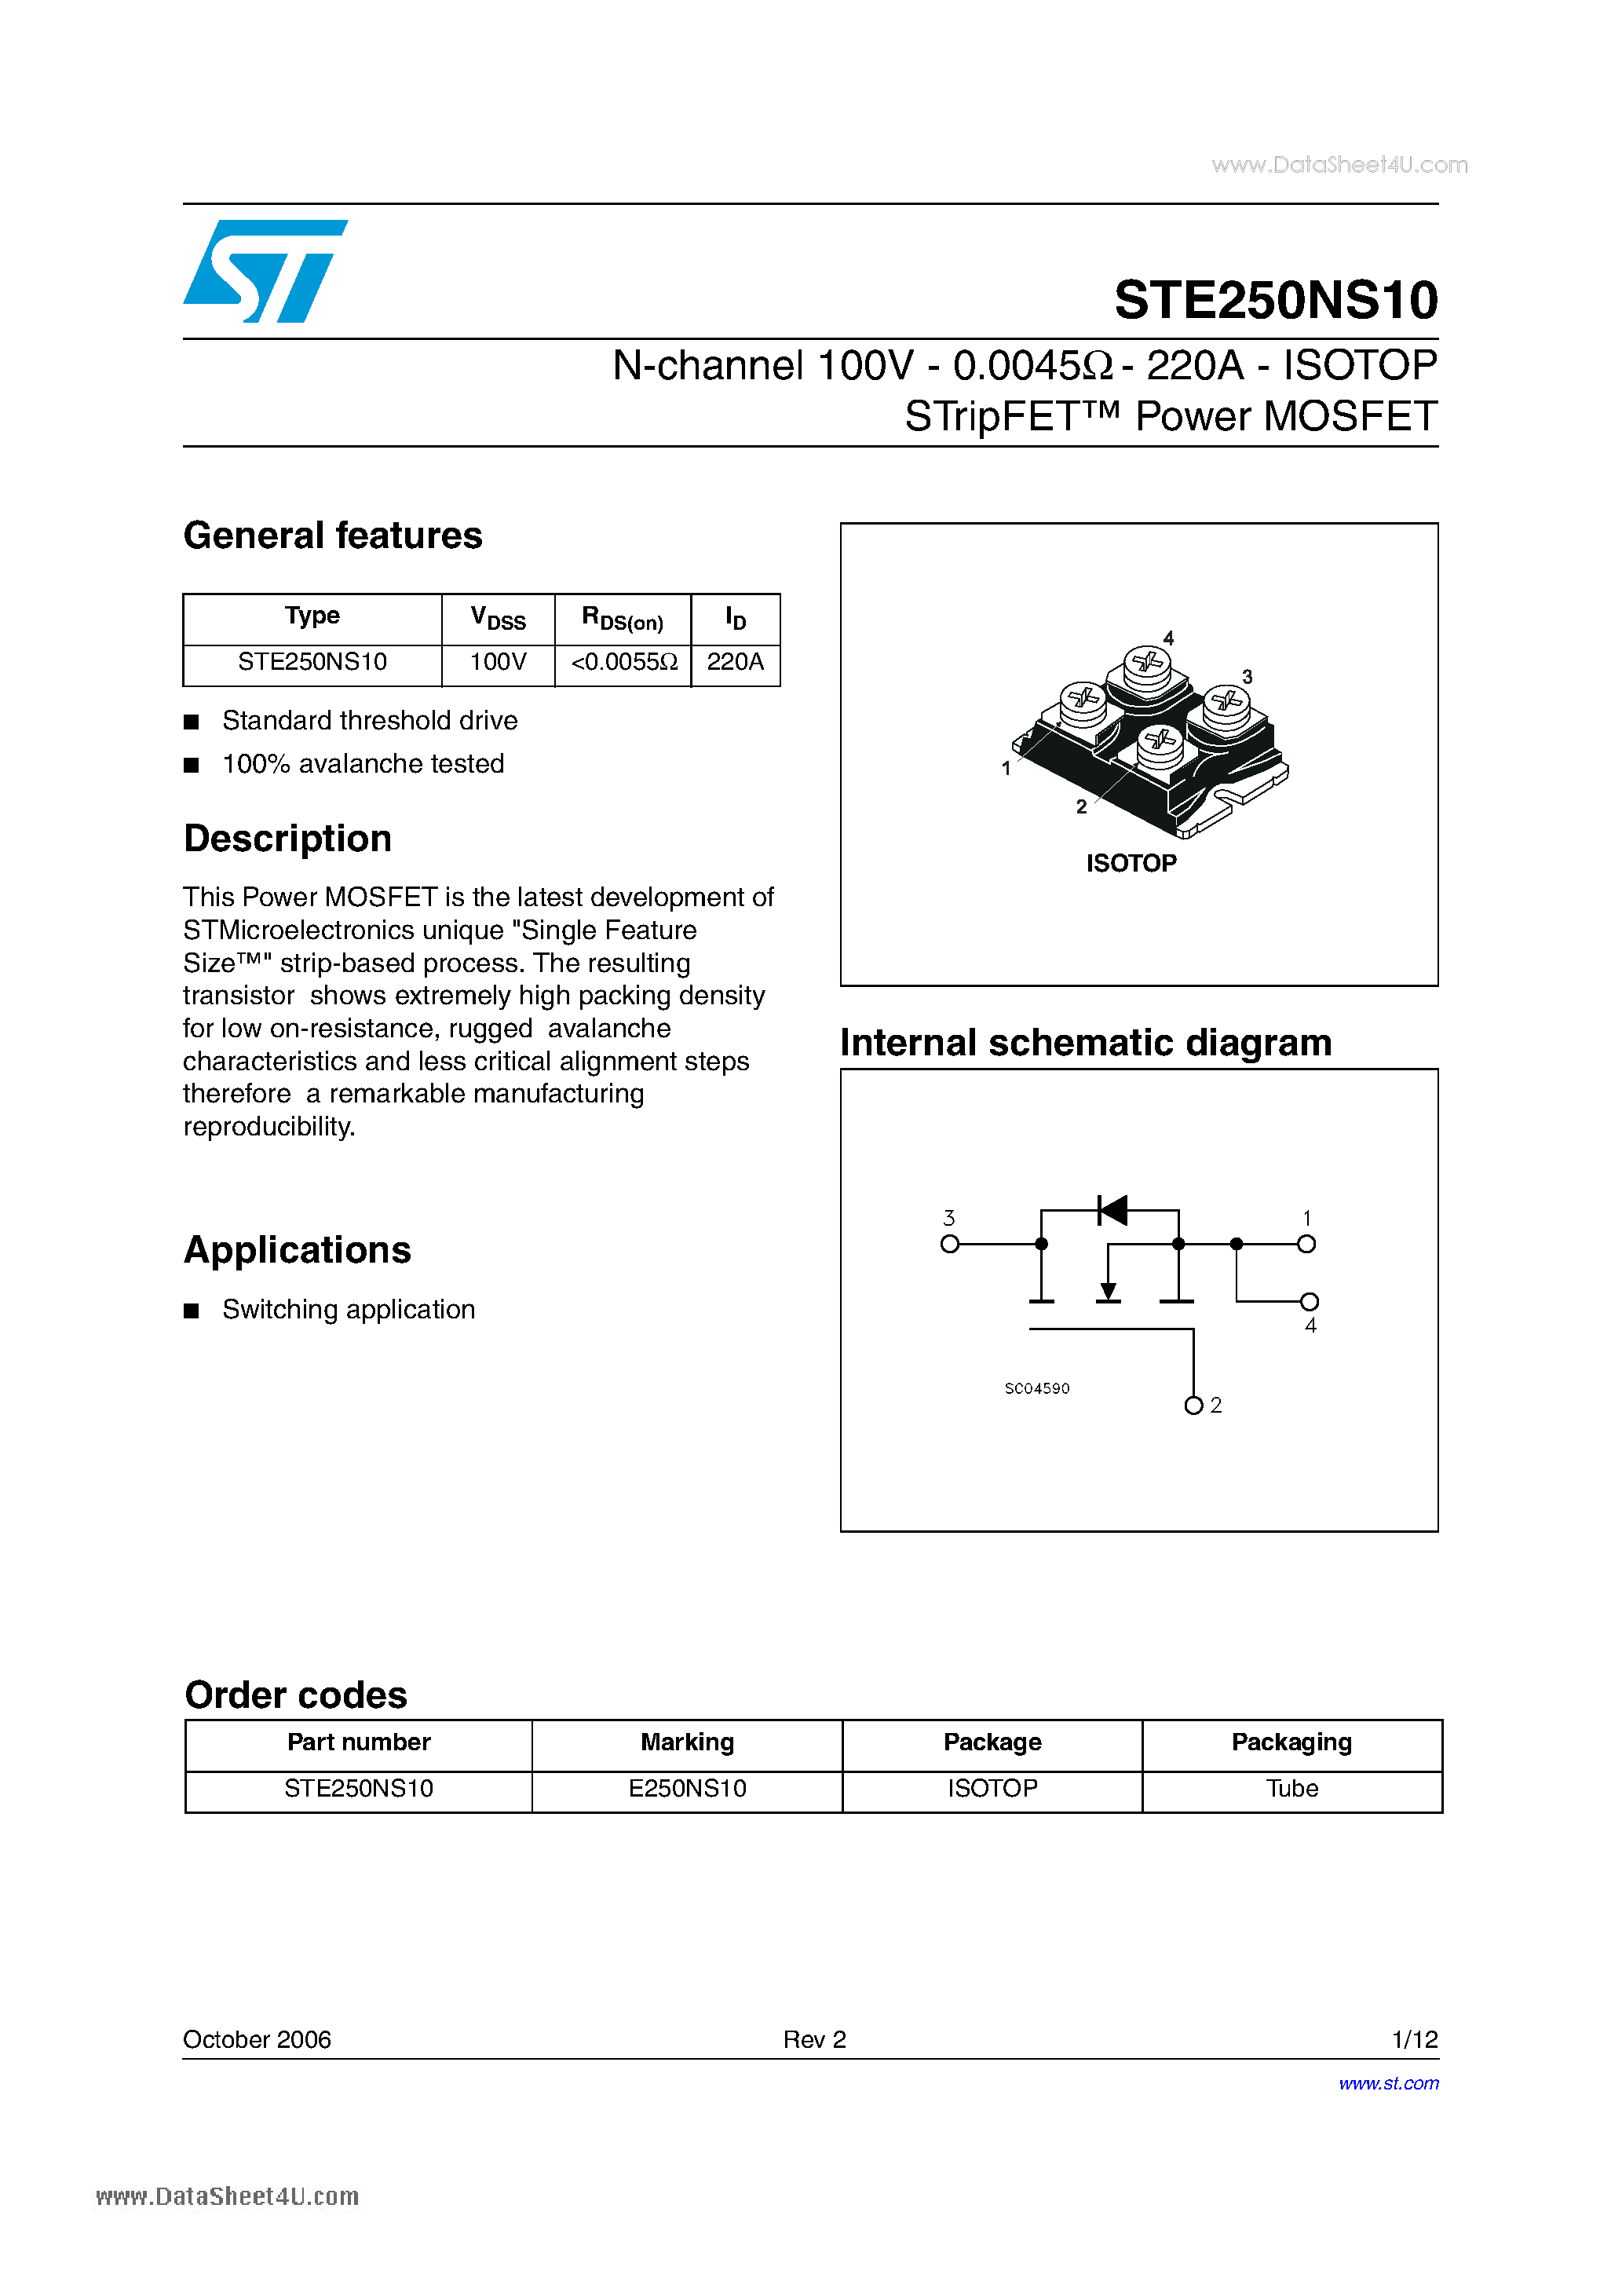 Datasheet STE250NS10 - ISOTOP STripFET Power MOSFET page 1